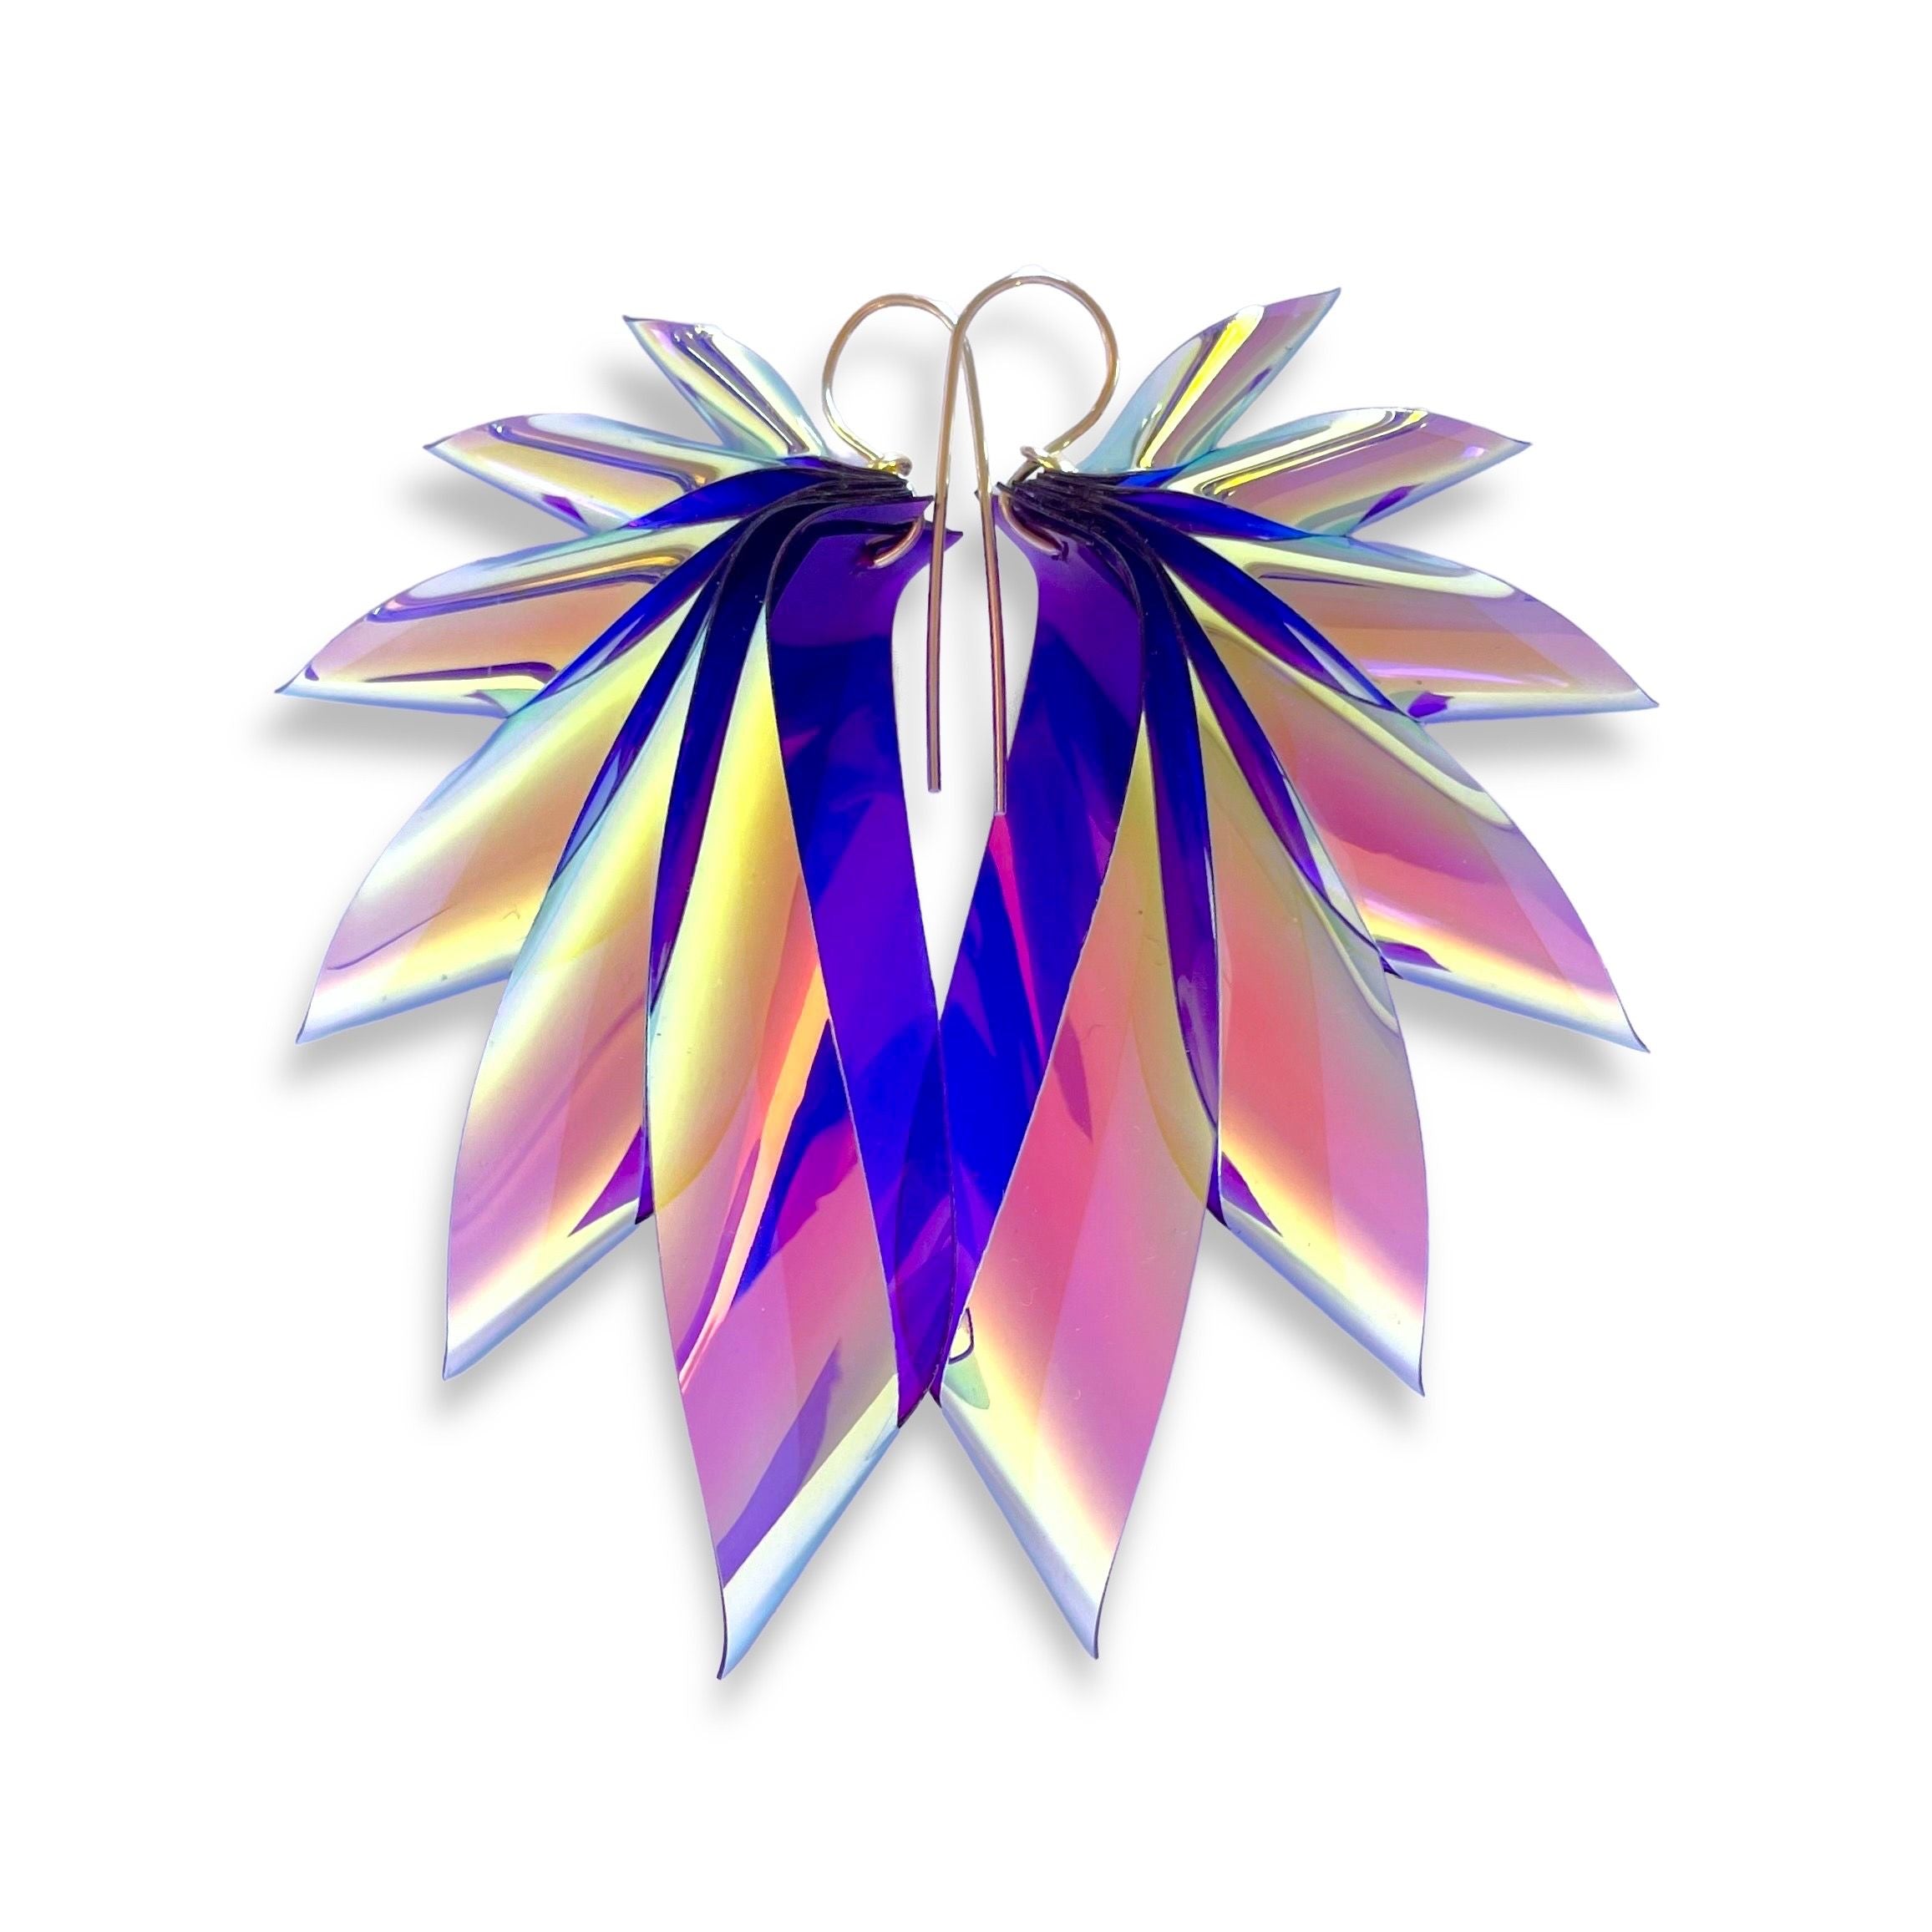 The Wings rainbow purple by Fossdal